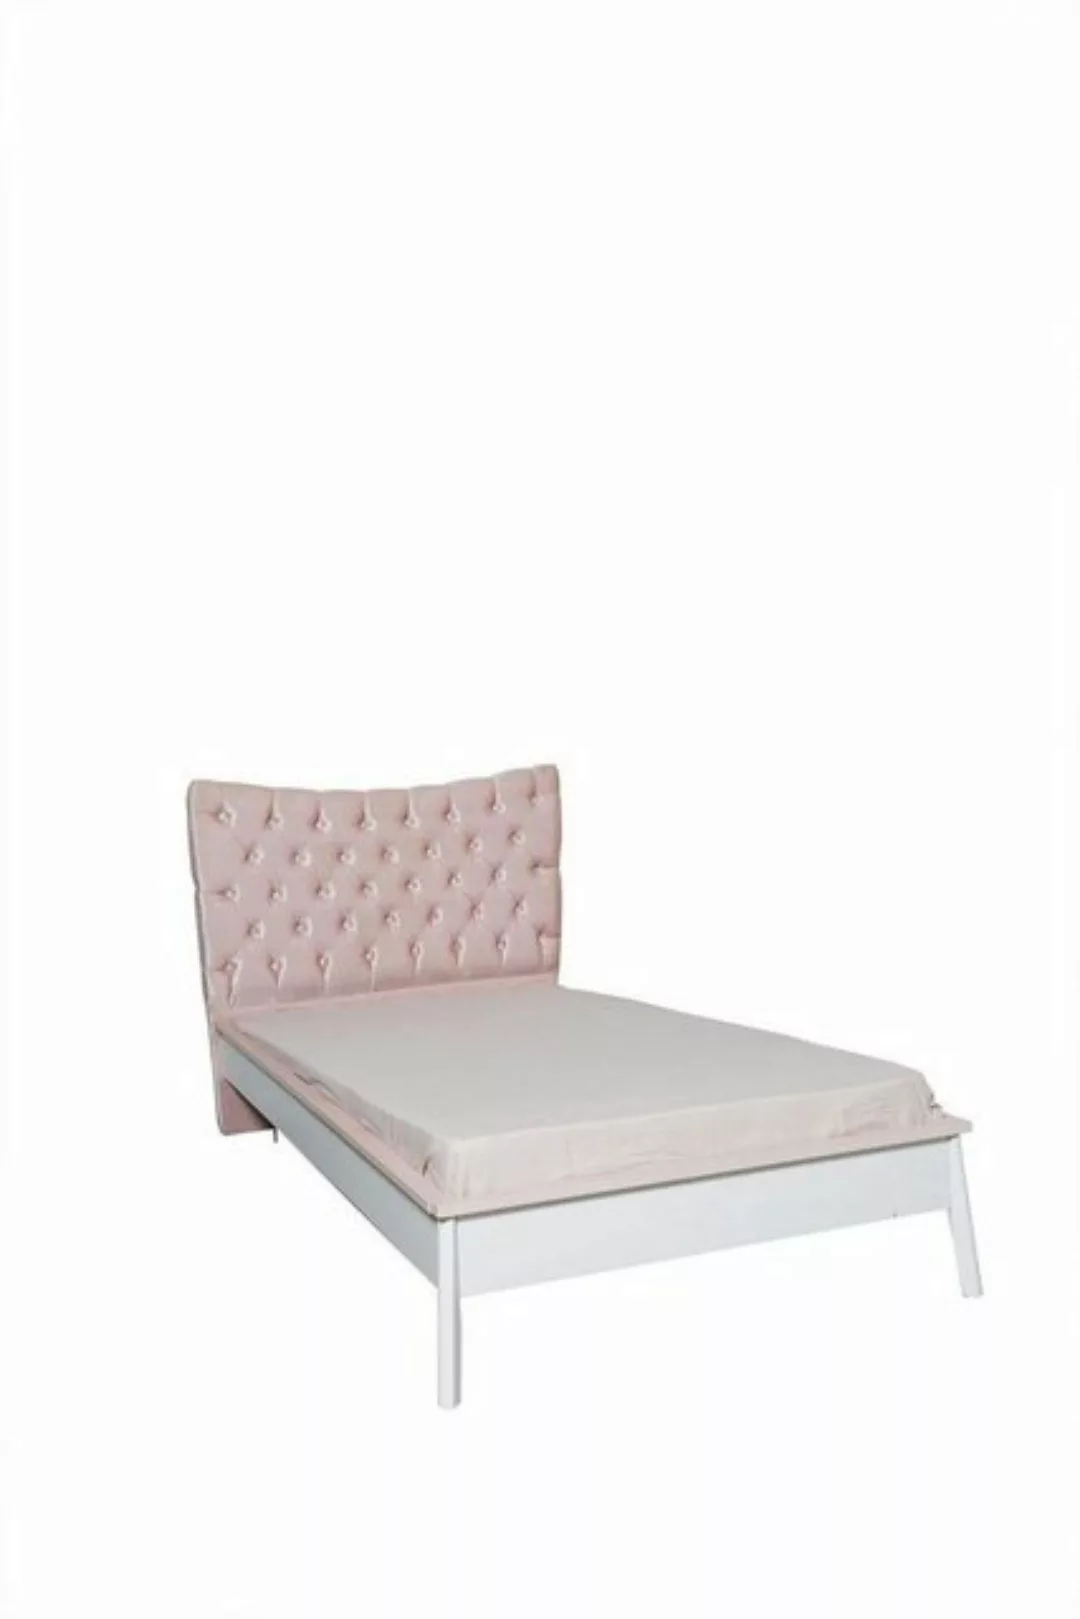 JVmoebel Bett Chesterfield Bett Schlafzimmer Design Betten Luxus Holzbett ( günstig online kaufen